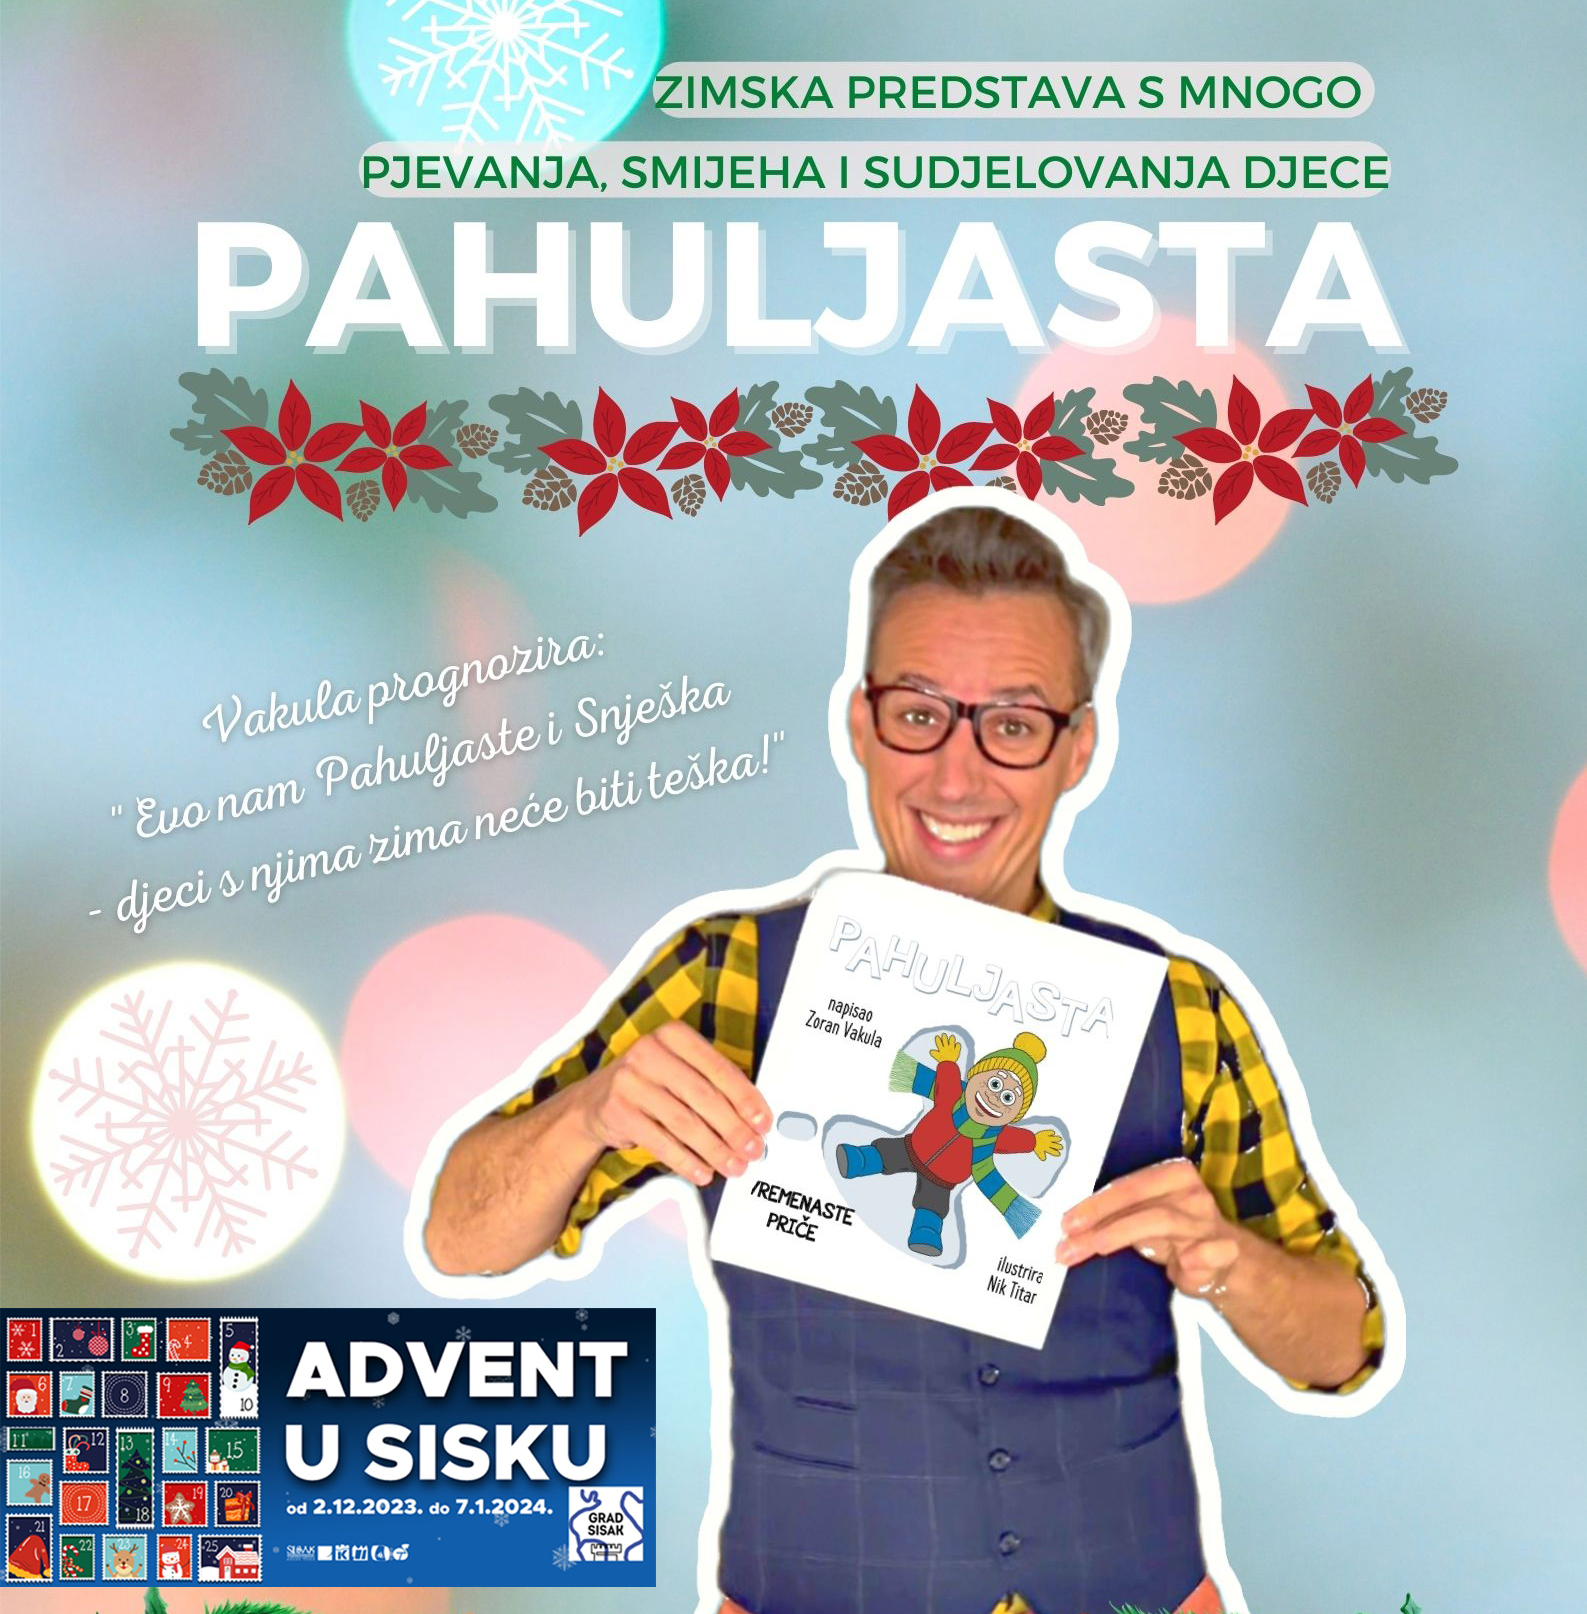 You are currently viewing “Pahuljasta” štiže na Advent u Sisku